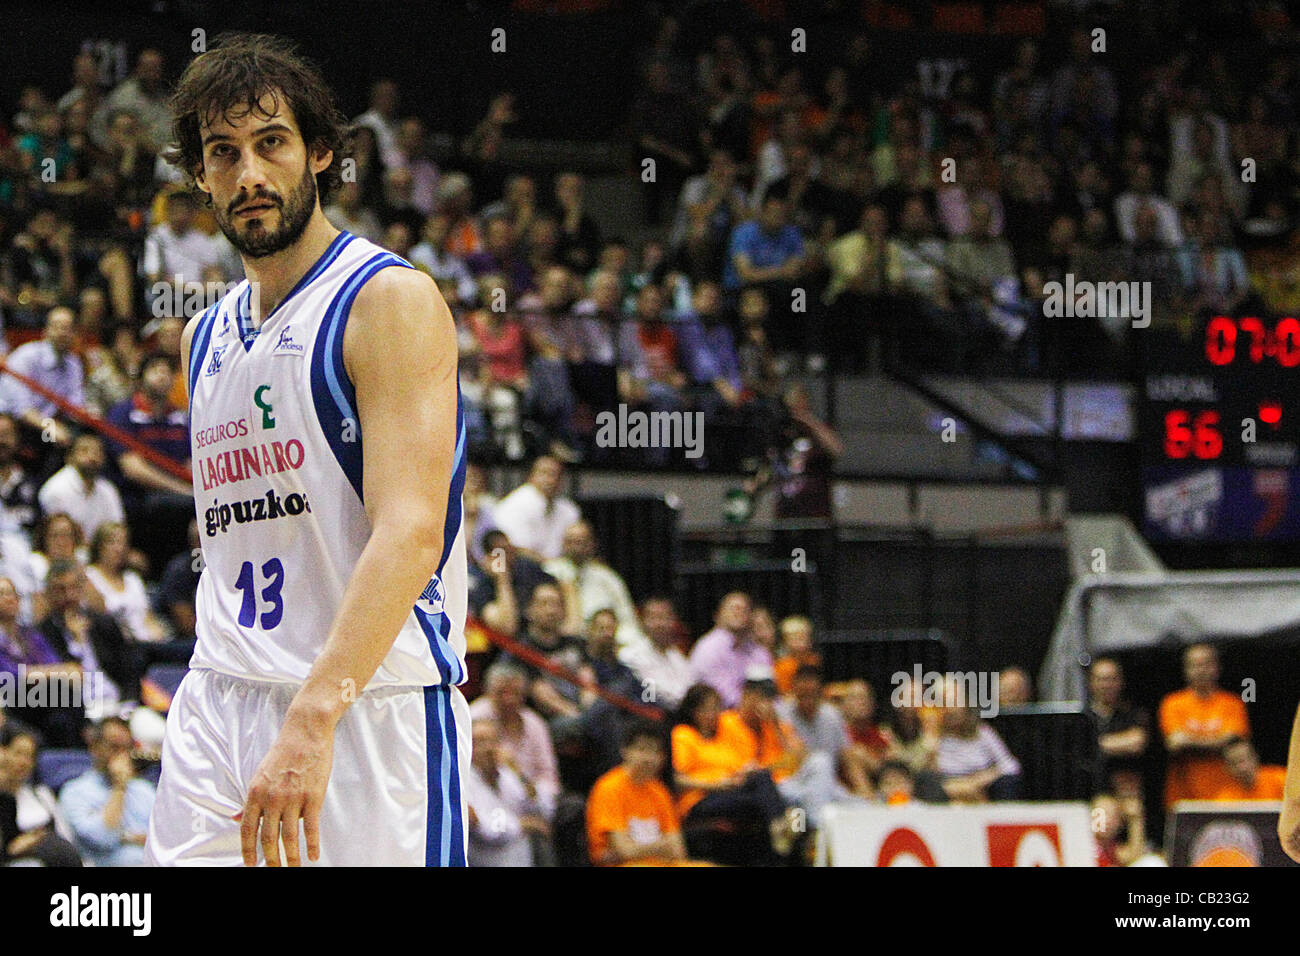 Liga ACB, Playoffs 2012 - 1/4 finals - Valencia Basket Club vs. Lagun Aro GBC - Font de Sant Lluis, Valencia - Spagna - terzo gioco, gioco finale Foto Stock